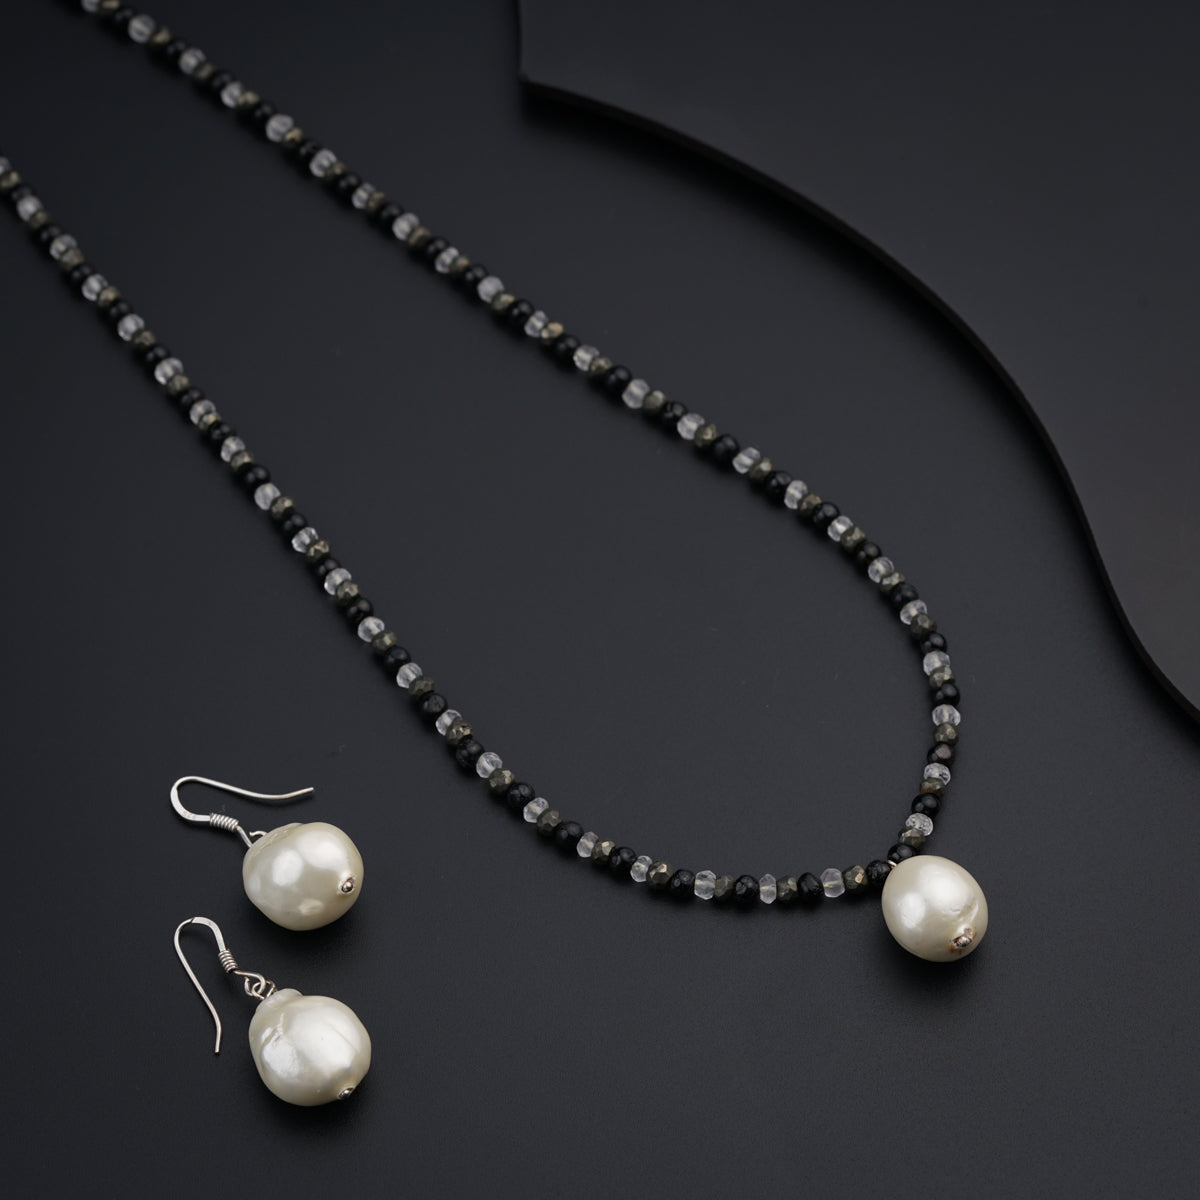 Amazon.com: Handmade Pear pendant necklace sterling silver necklace pendant  fruit necklace fruit pendant necklaces : Handmade Products